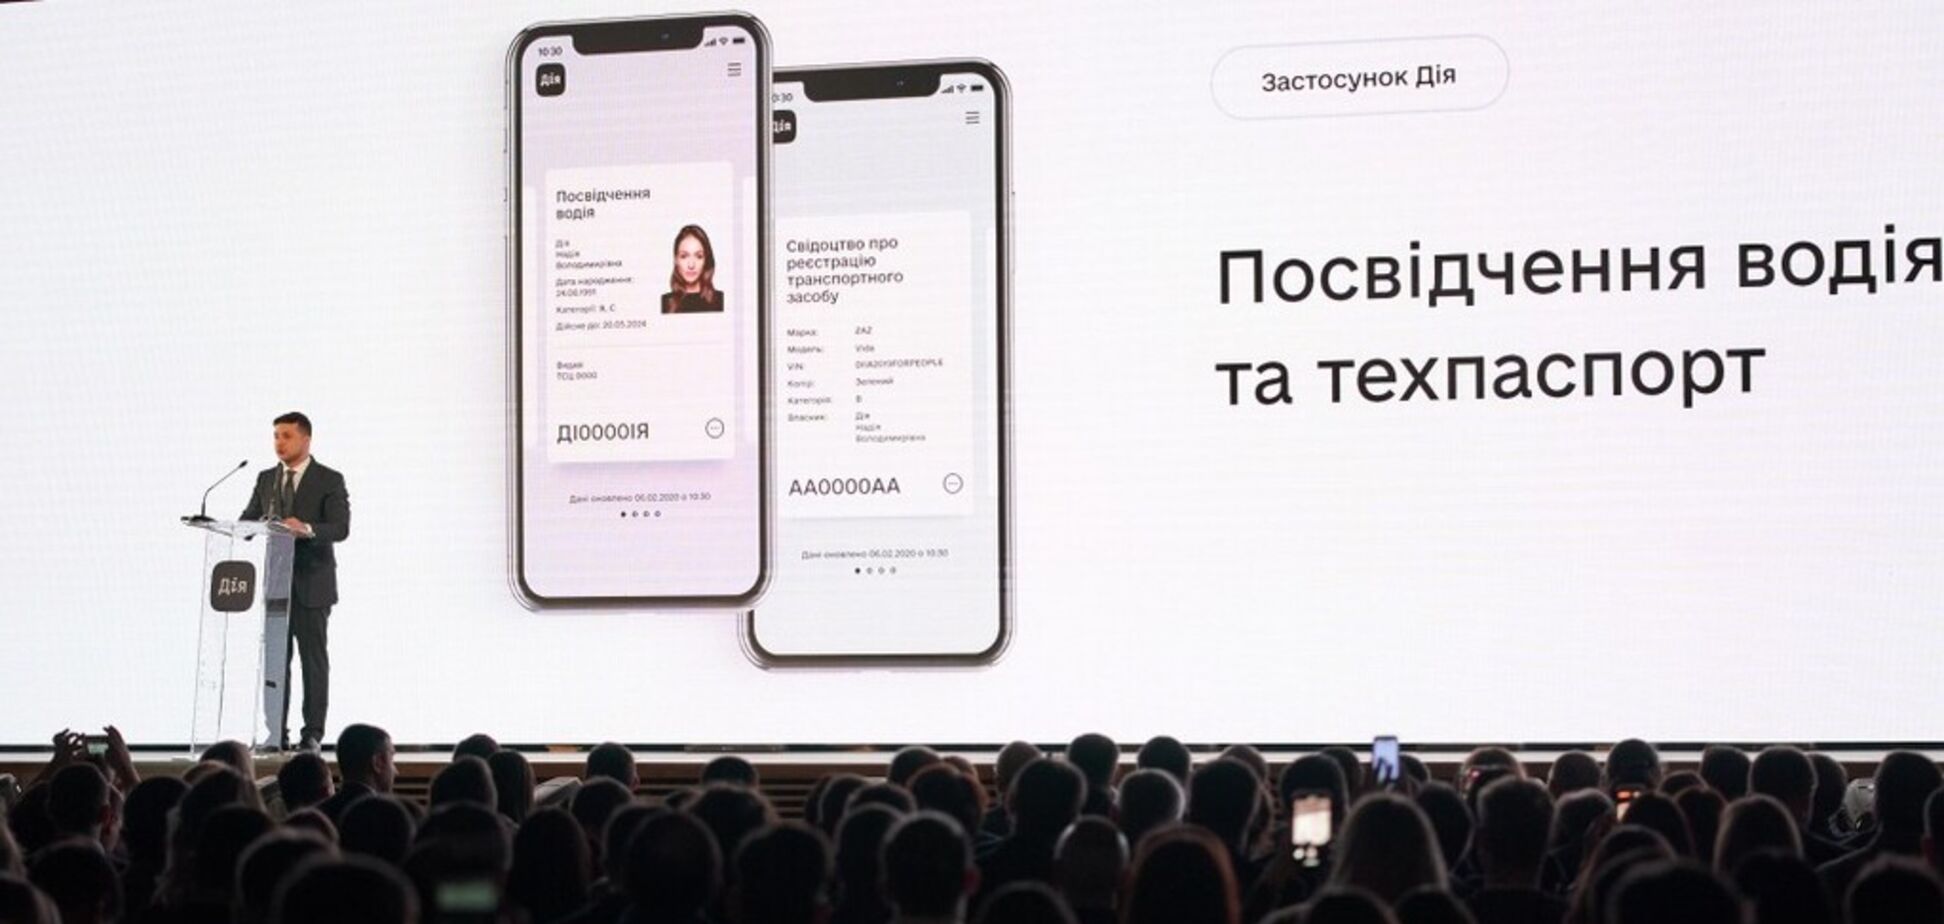 Права и паспорт в смартфоне: в Украине запустили приложение 'Дія'